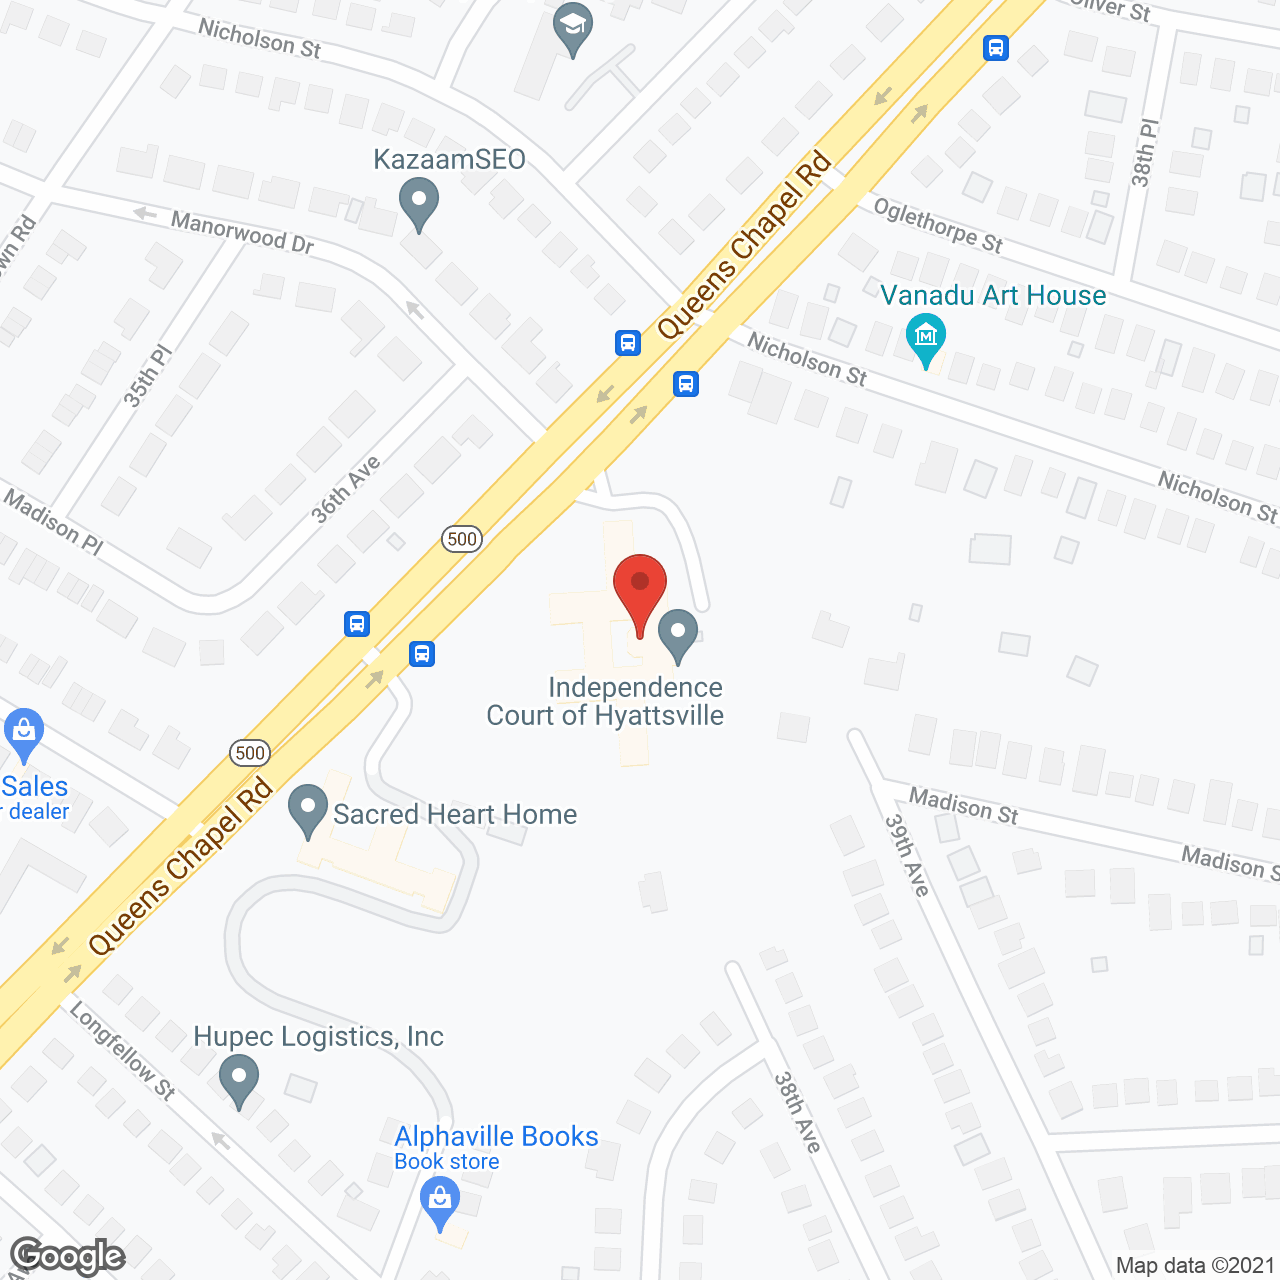 Independence Court of Hyattsville in google map